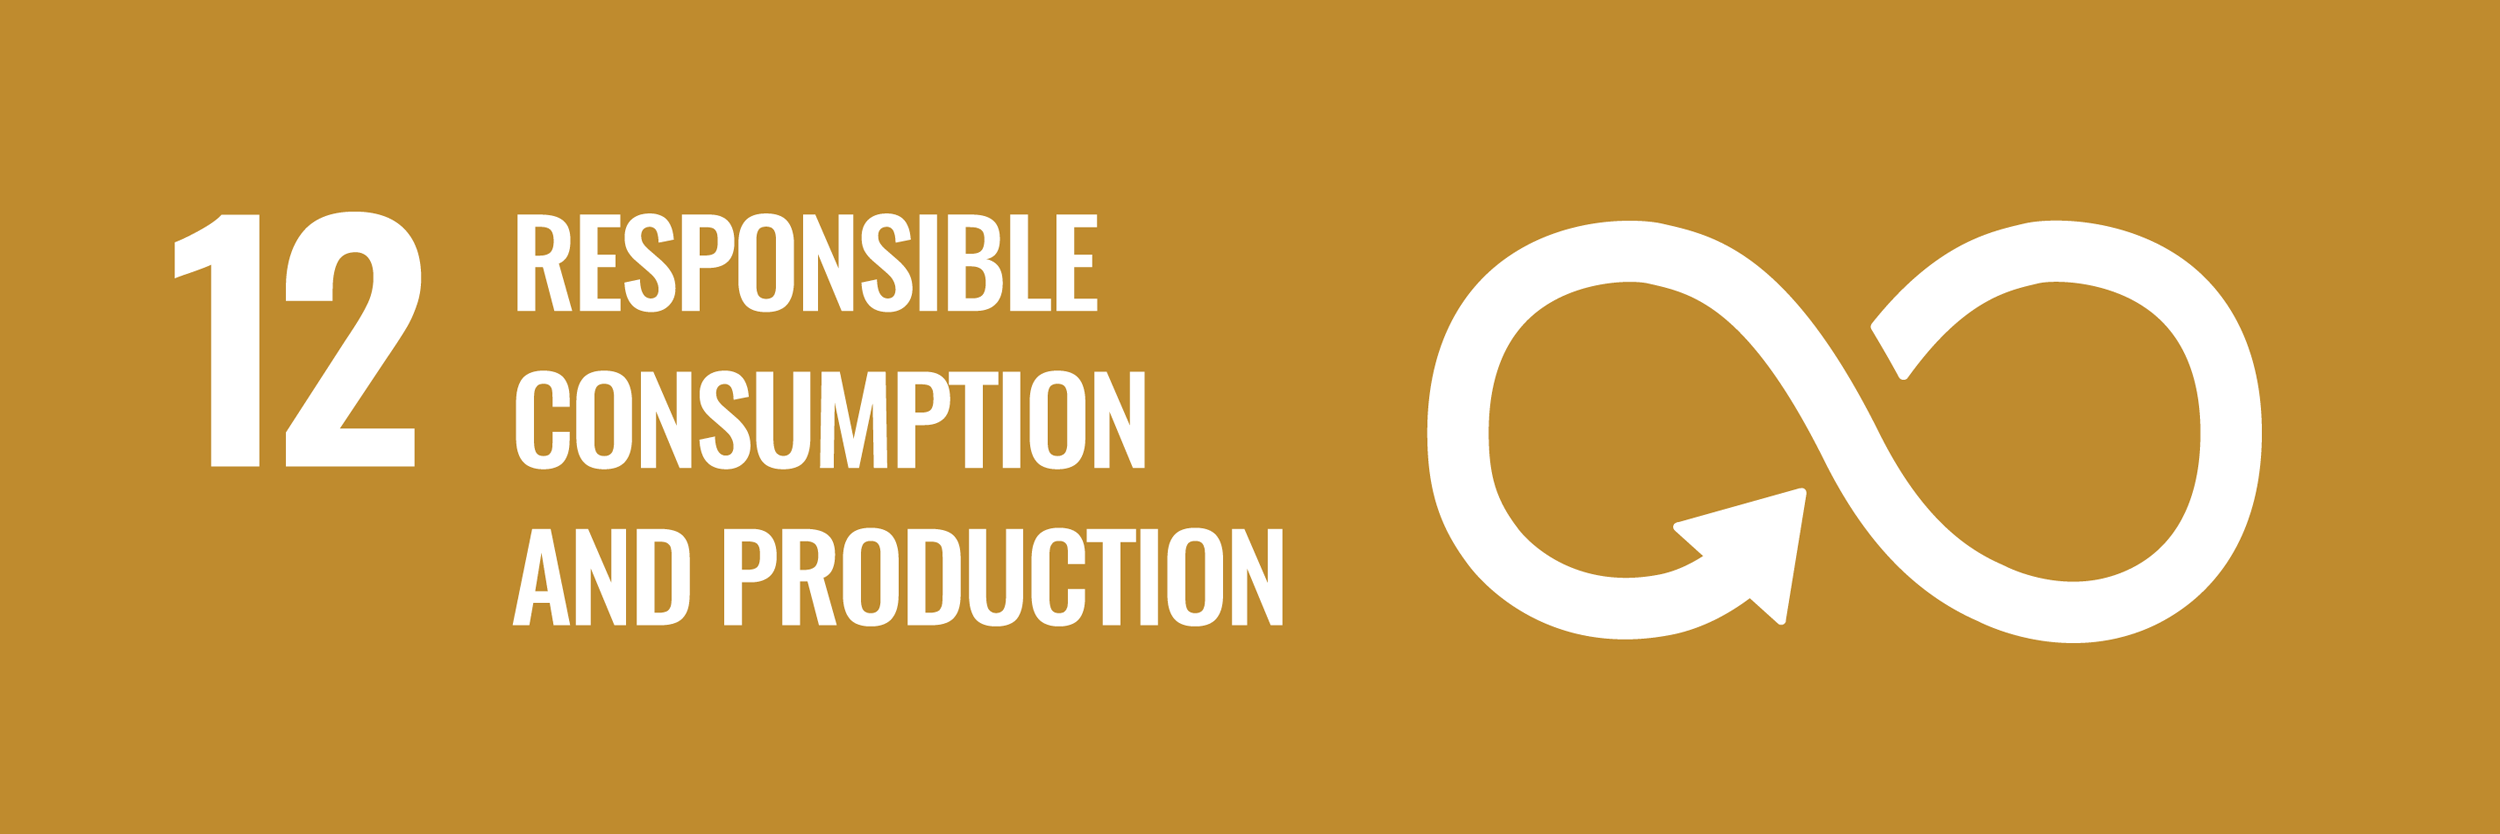 ODD - 12 consommation et production responsables